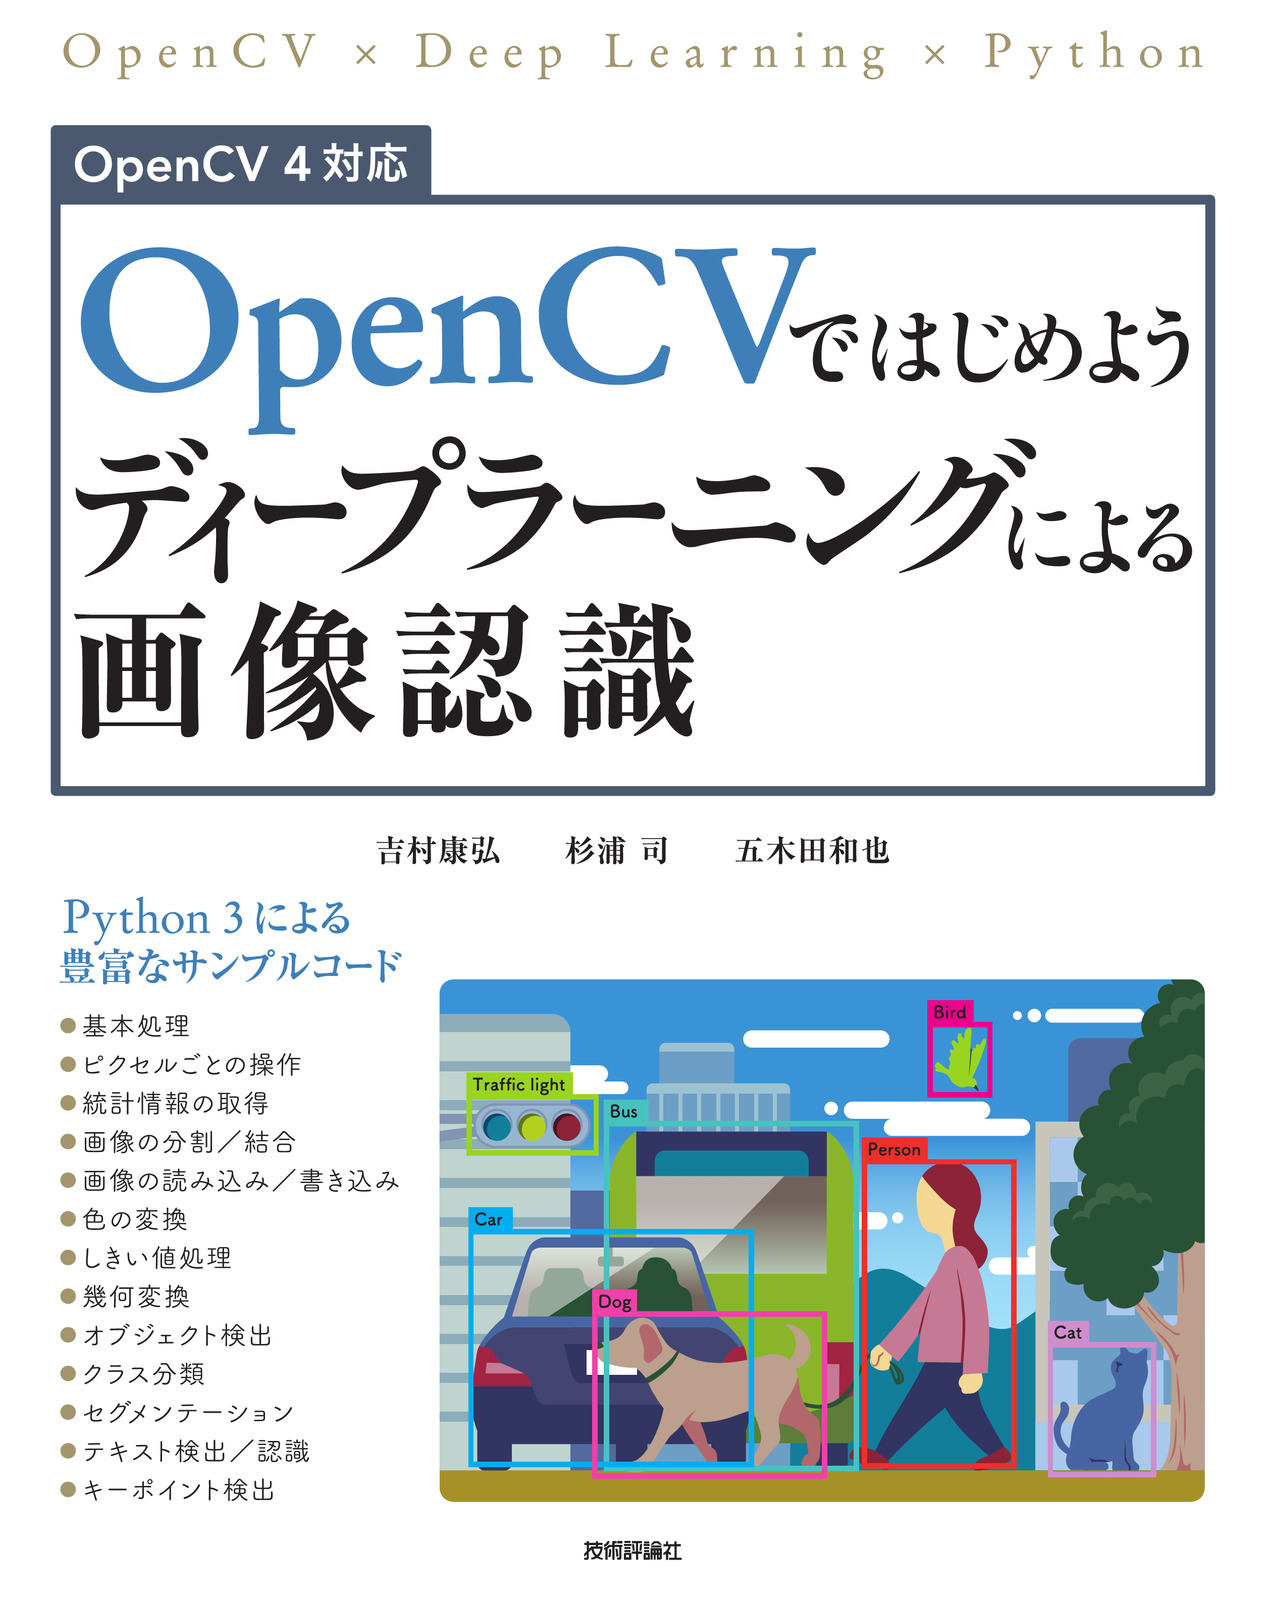 OpenCVではじめよう ディープラーニングによる画像認識